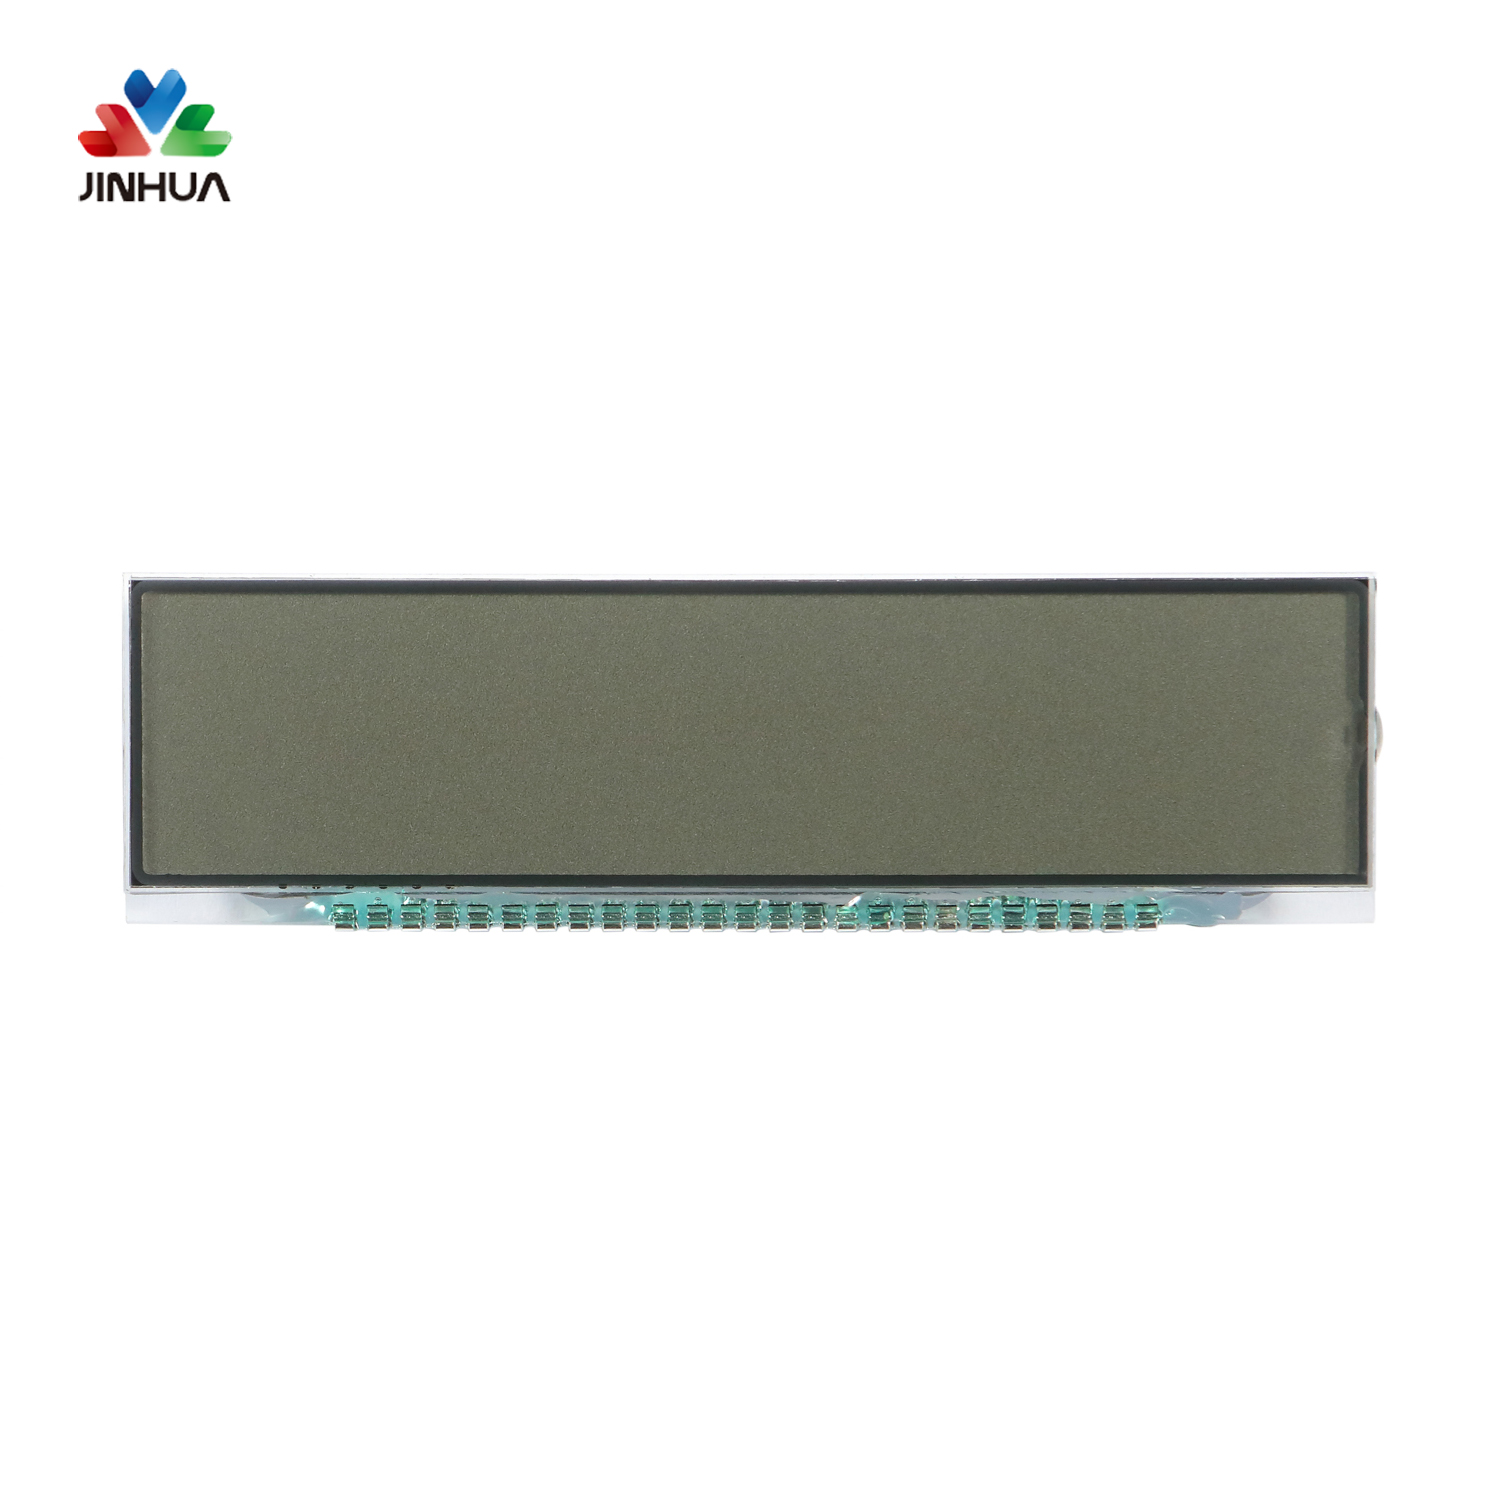 Custom Pins Positive Reflective TN Segment LCD Display for Gas Meter